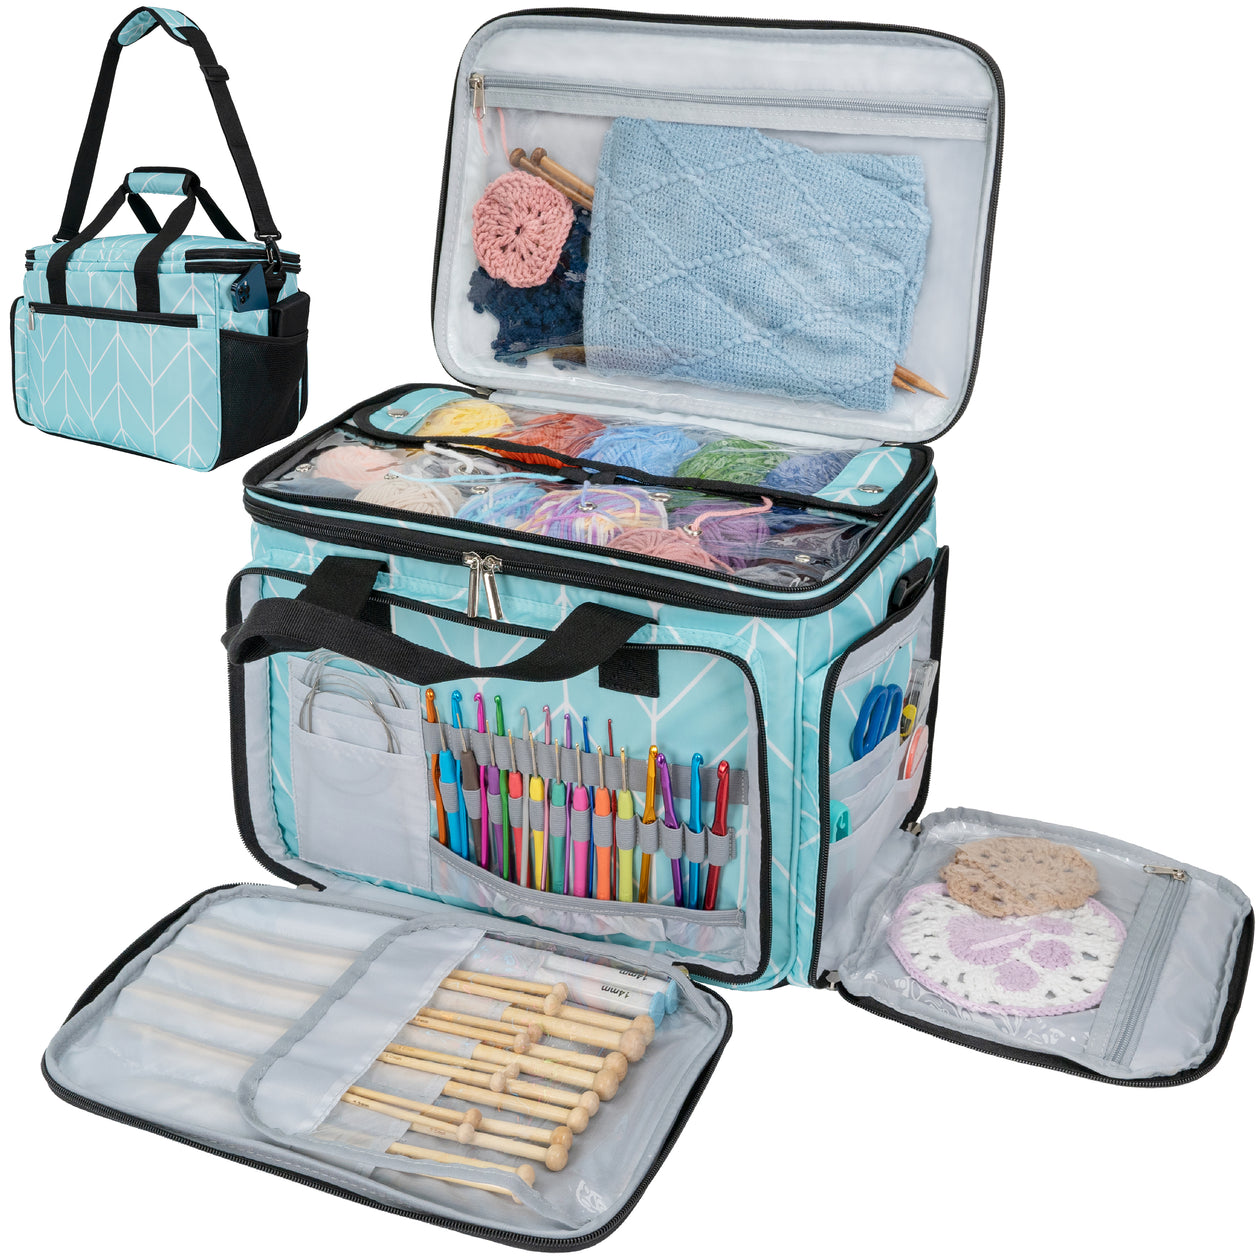 Knitting Bag Backpack,Yarn Storage Organizer Travel Crochet Bag with U –  Fig Basket Crochet & Creative